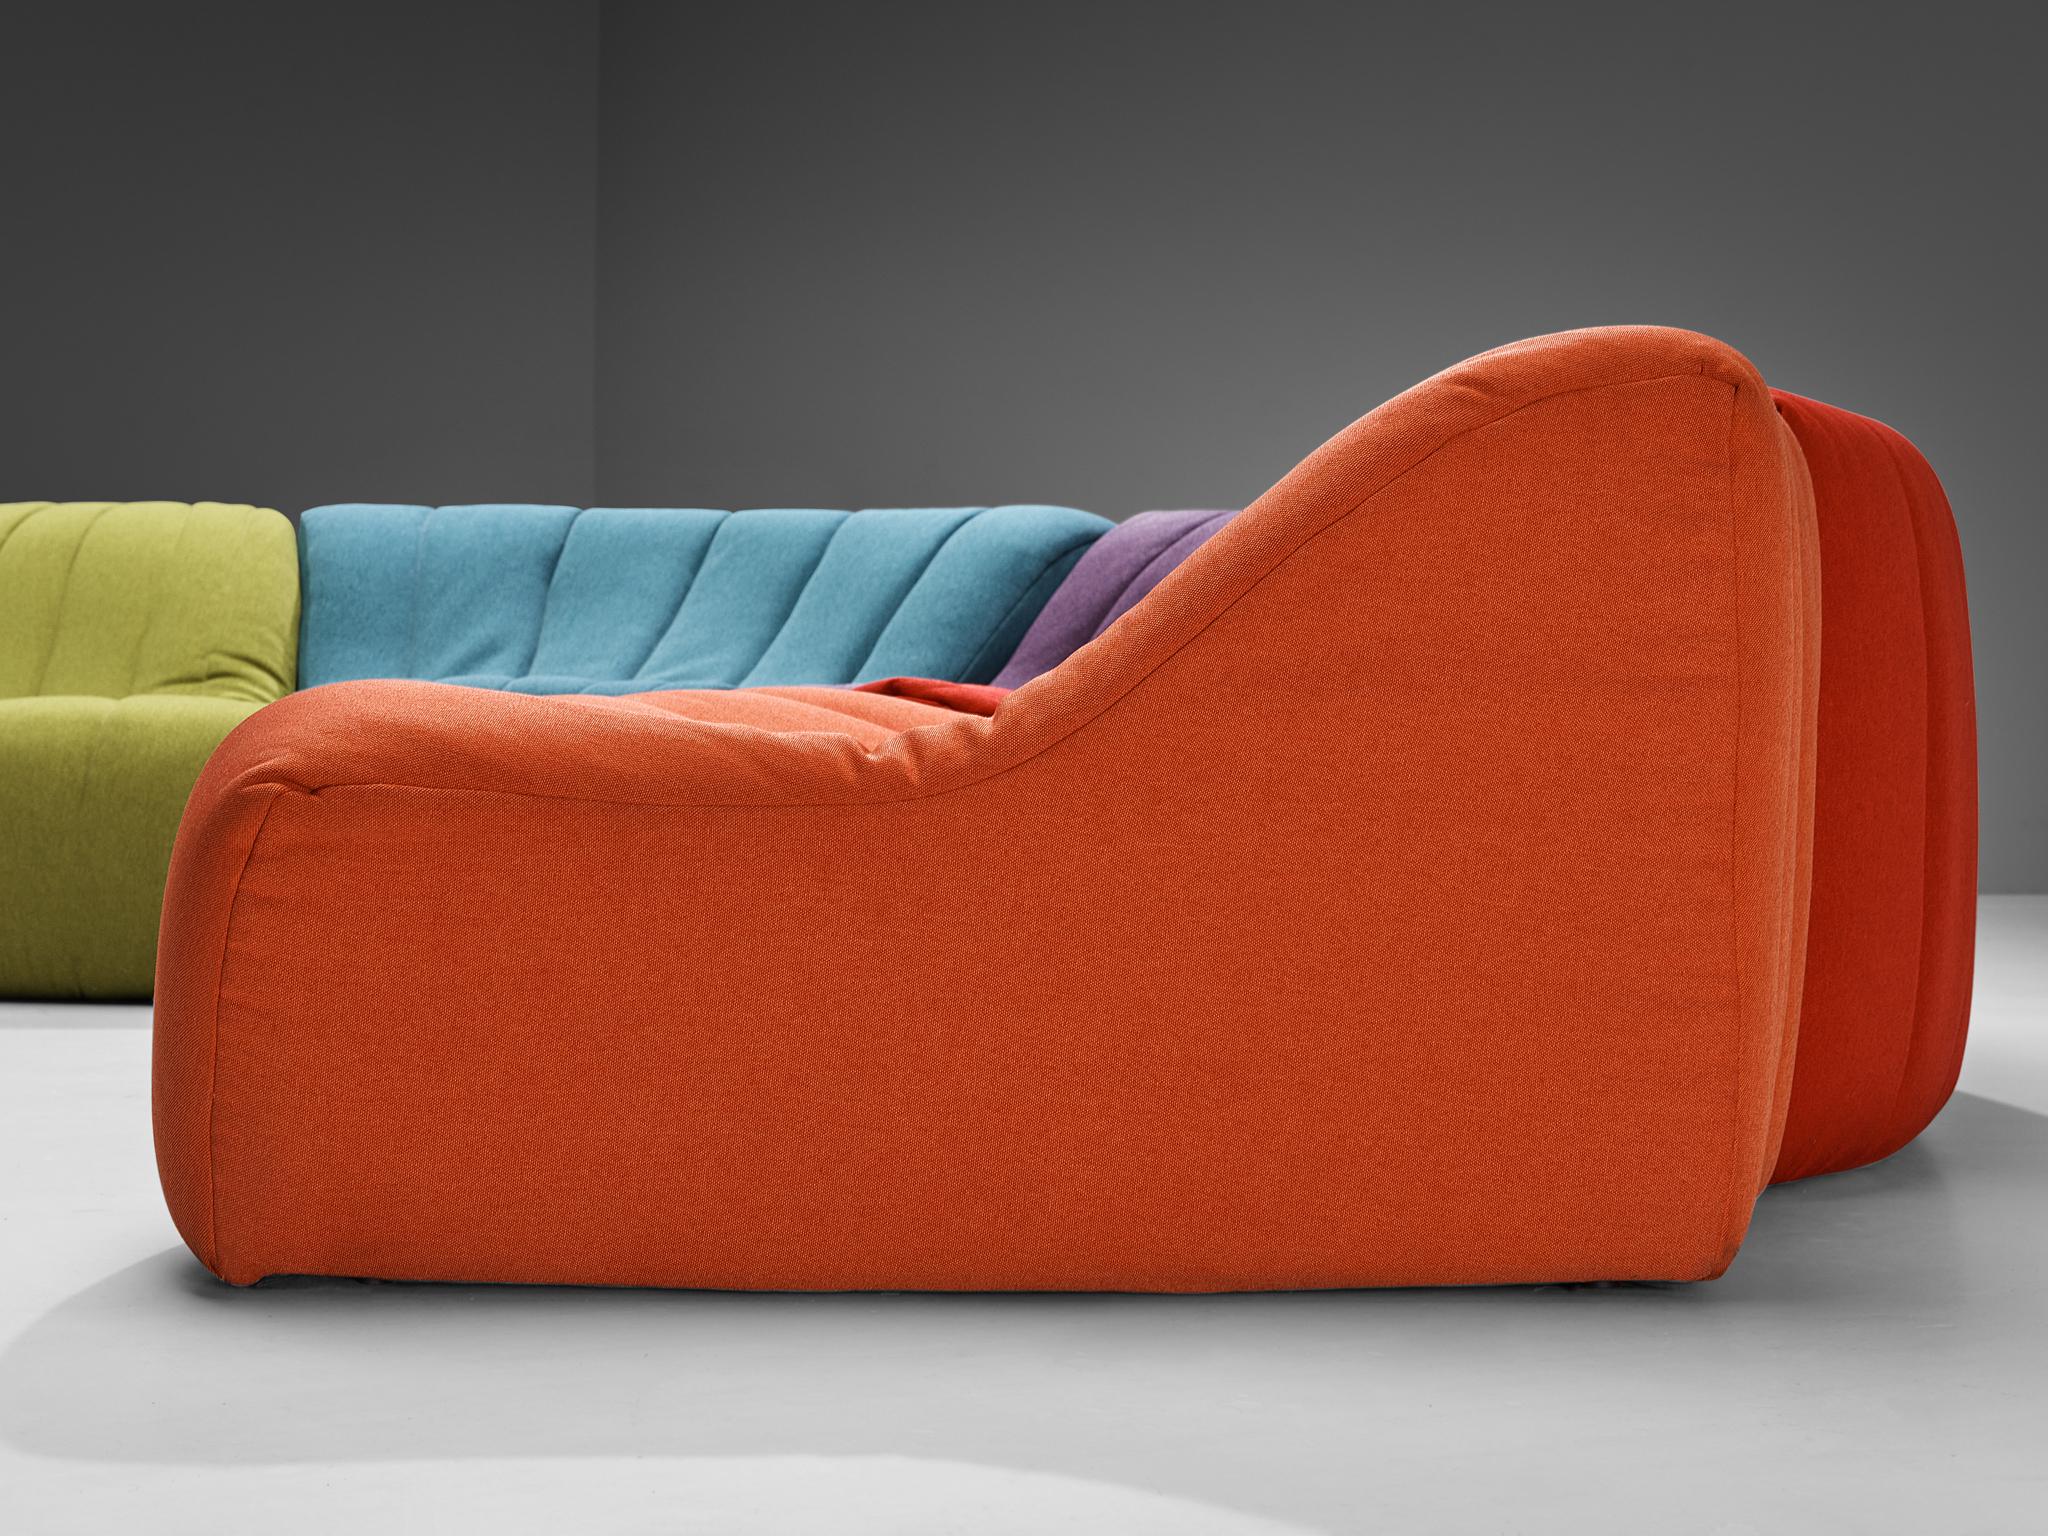 Fabric Kwok Hoi Chan for Steiner 'Chromatic' Multicolored Modular Sofa